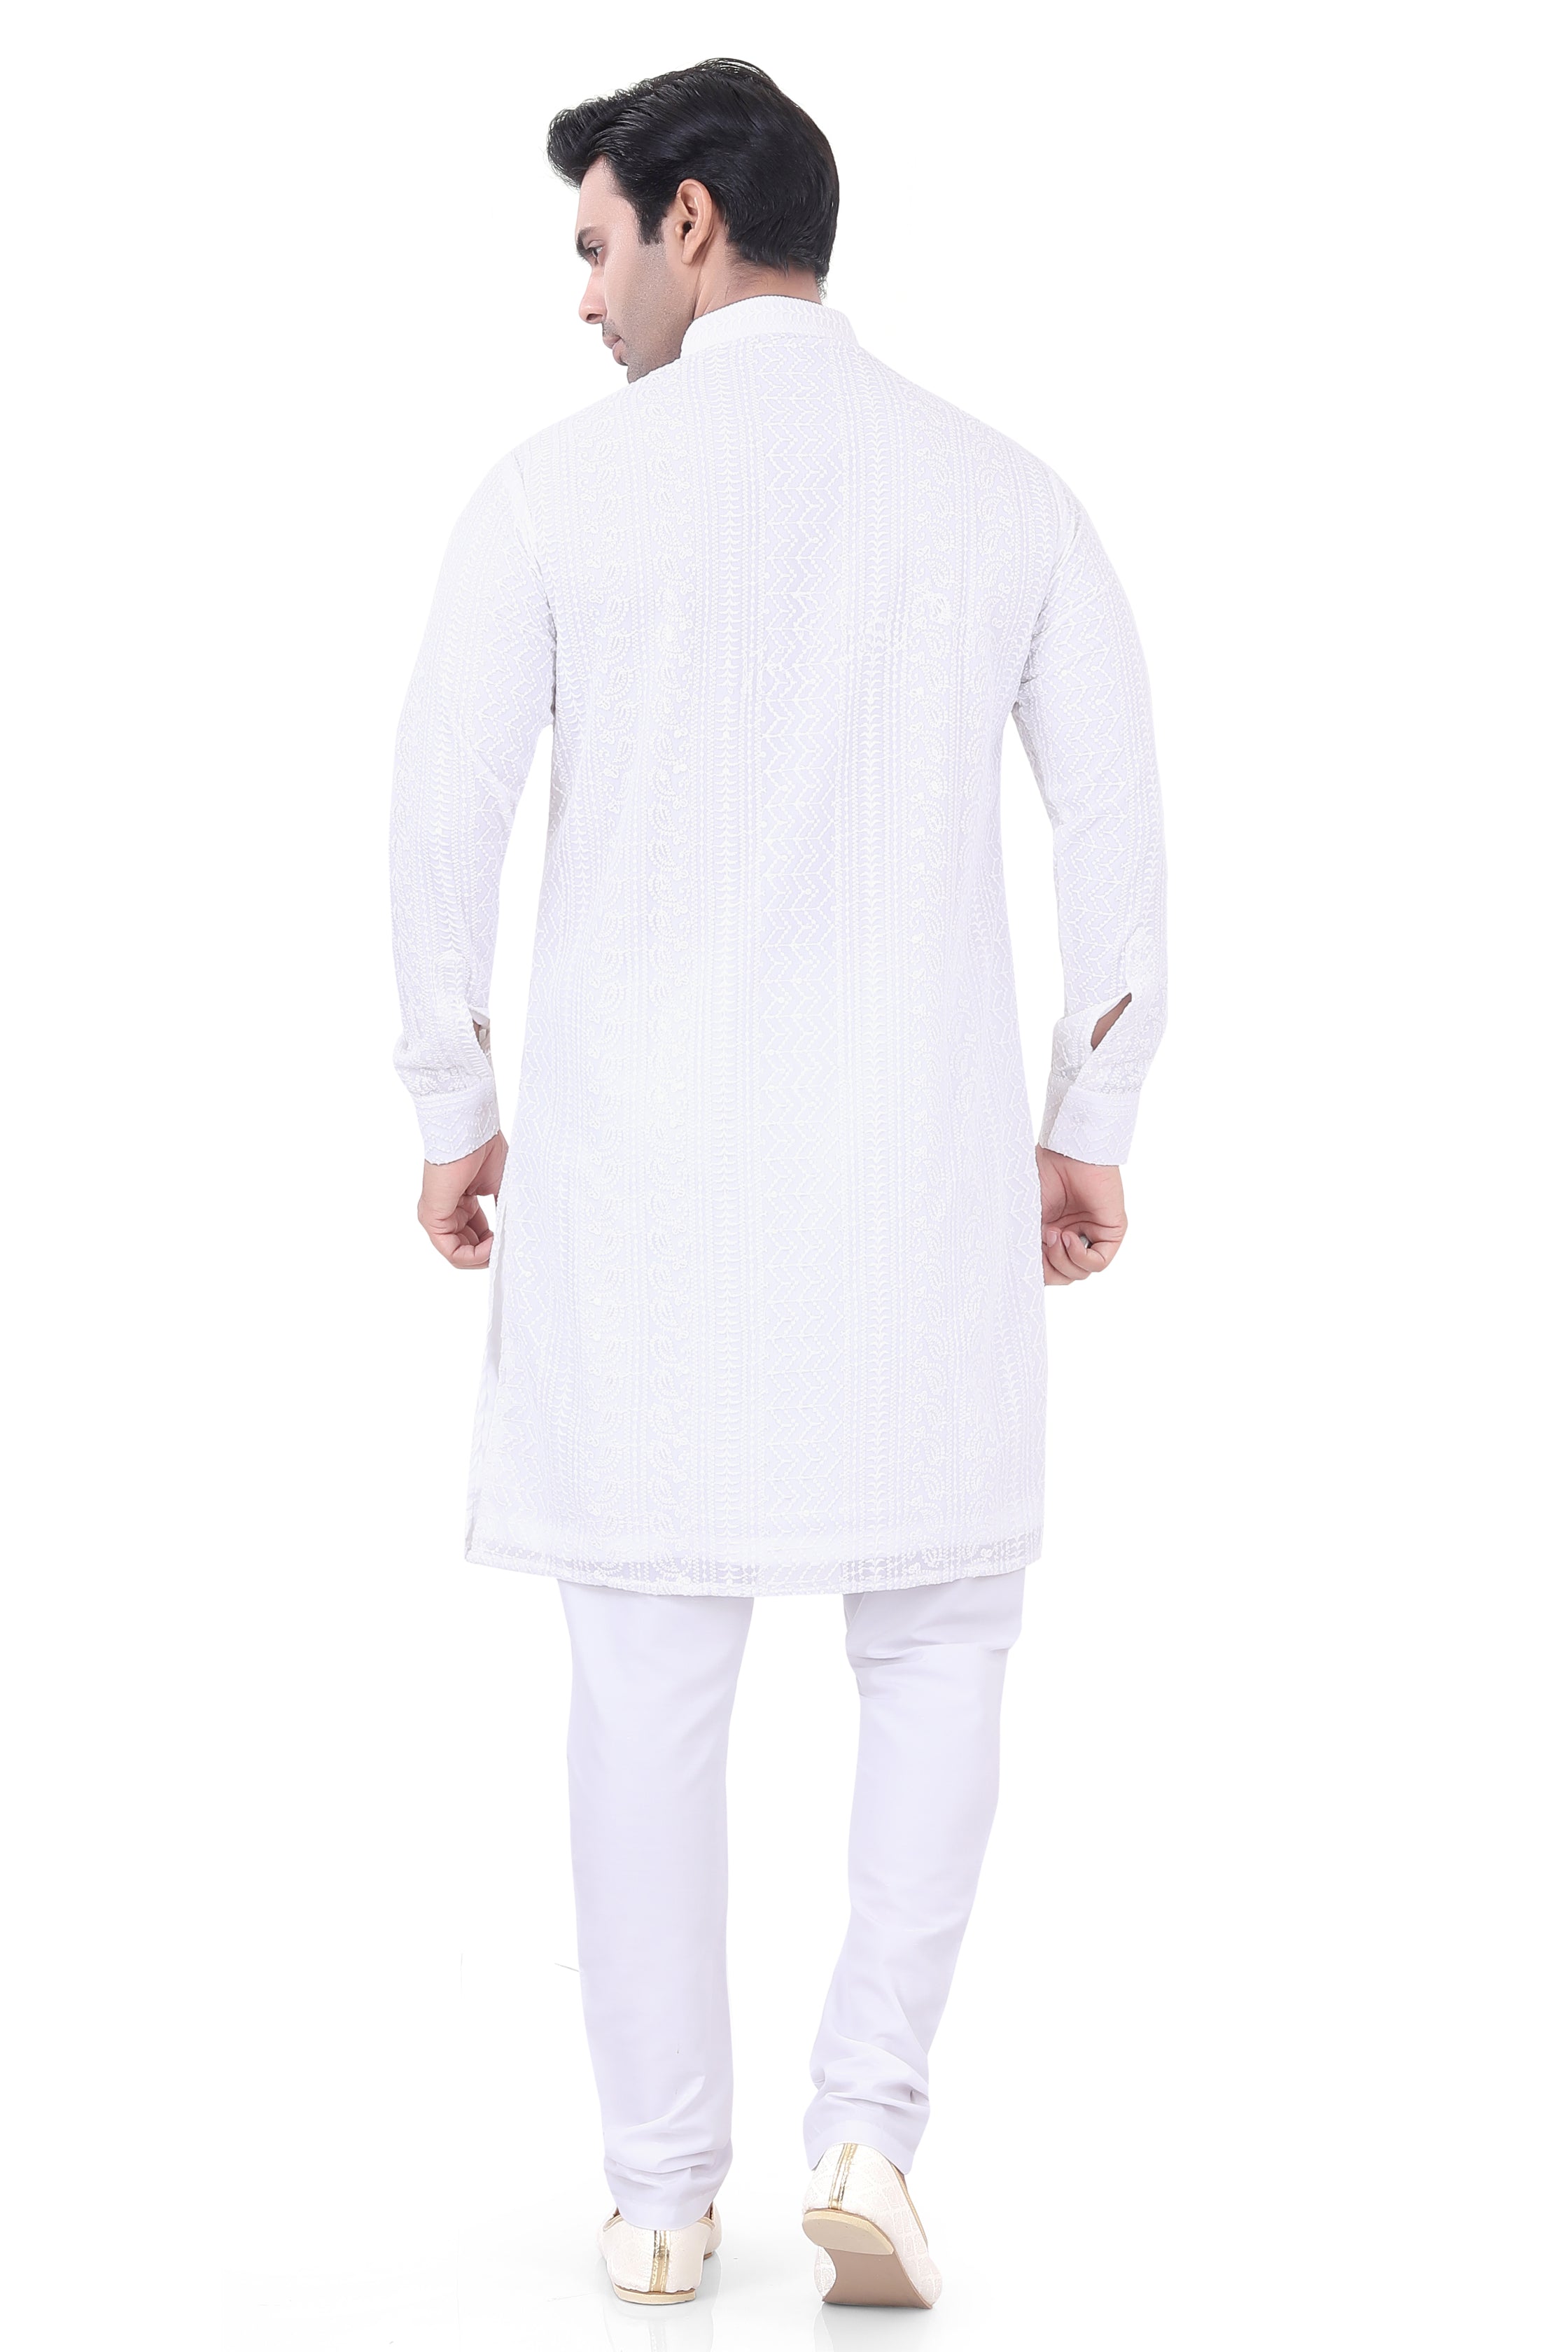 Lucknowi  Kurta Pajama Set in White - LCKP-009